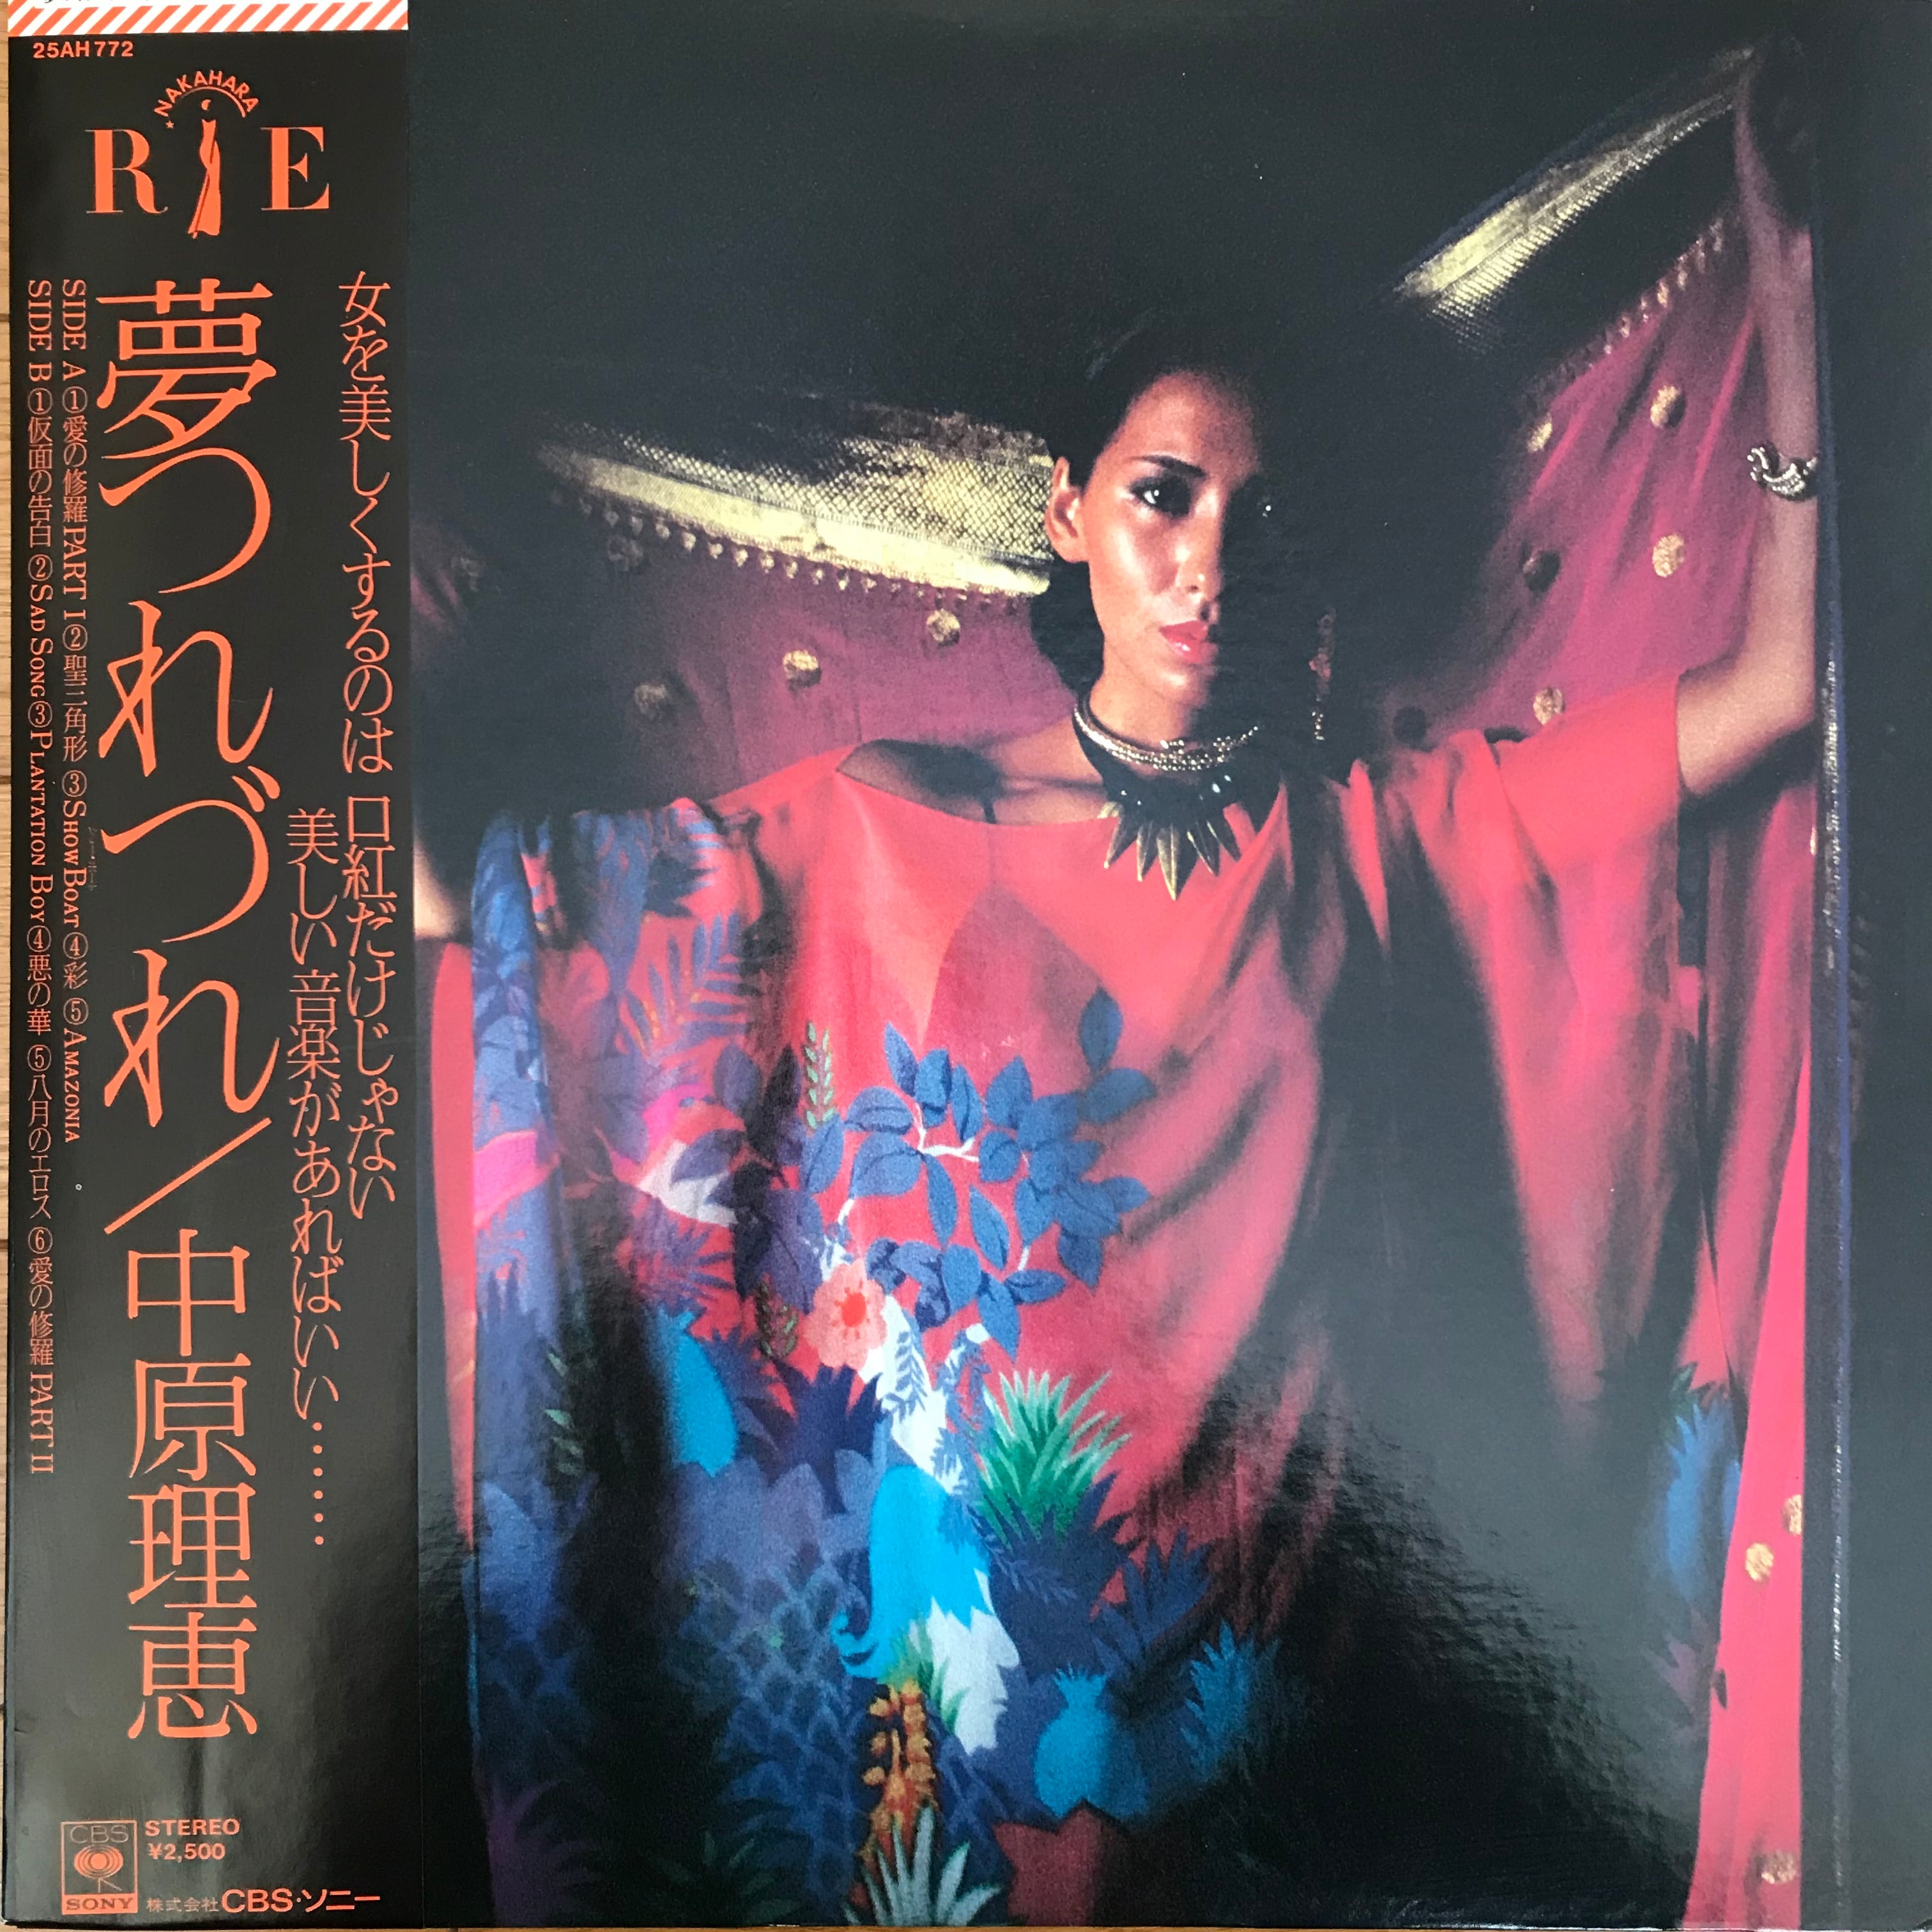 KAYOCO / TOY BOY | PASSTIME RECORDS / パスタイム レコード